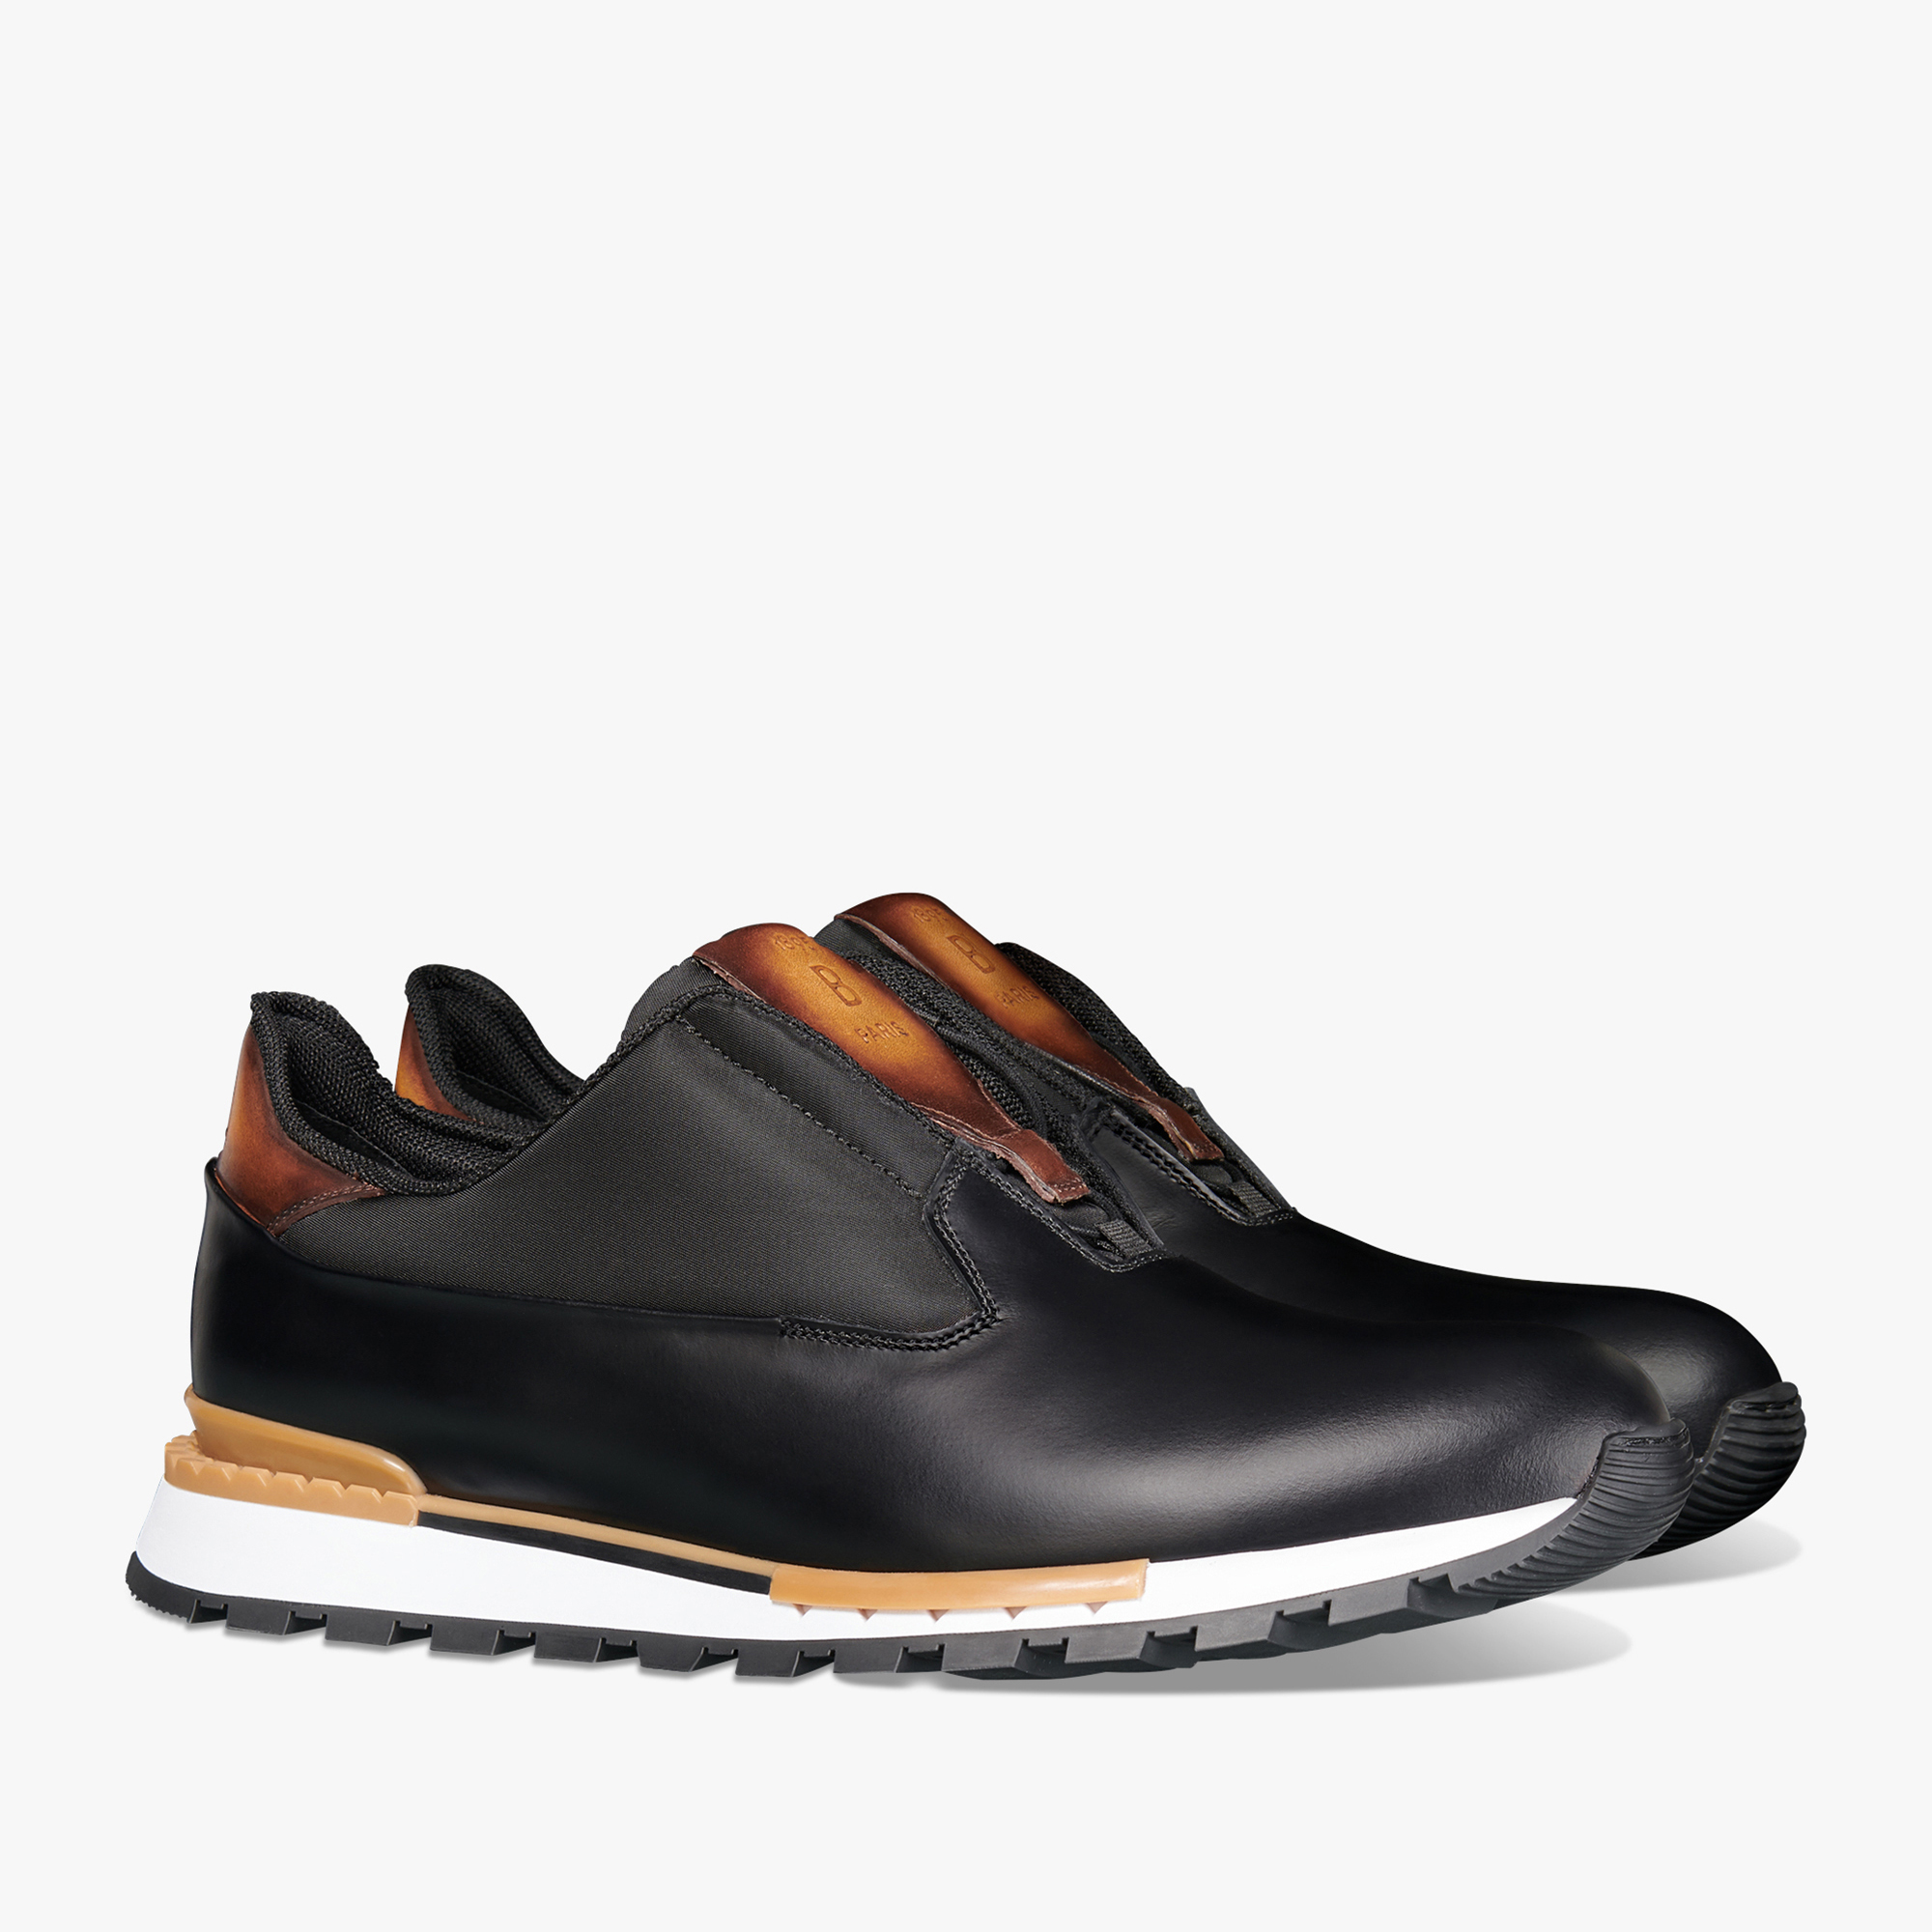 S4970 002 fast track leather sneaker black berluti 02